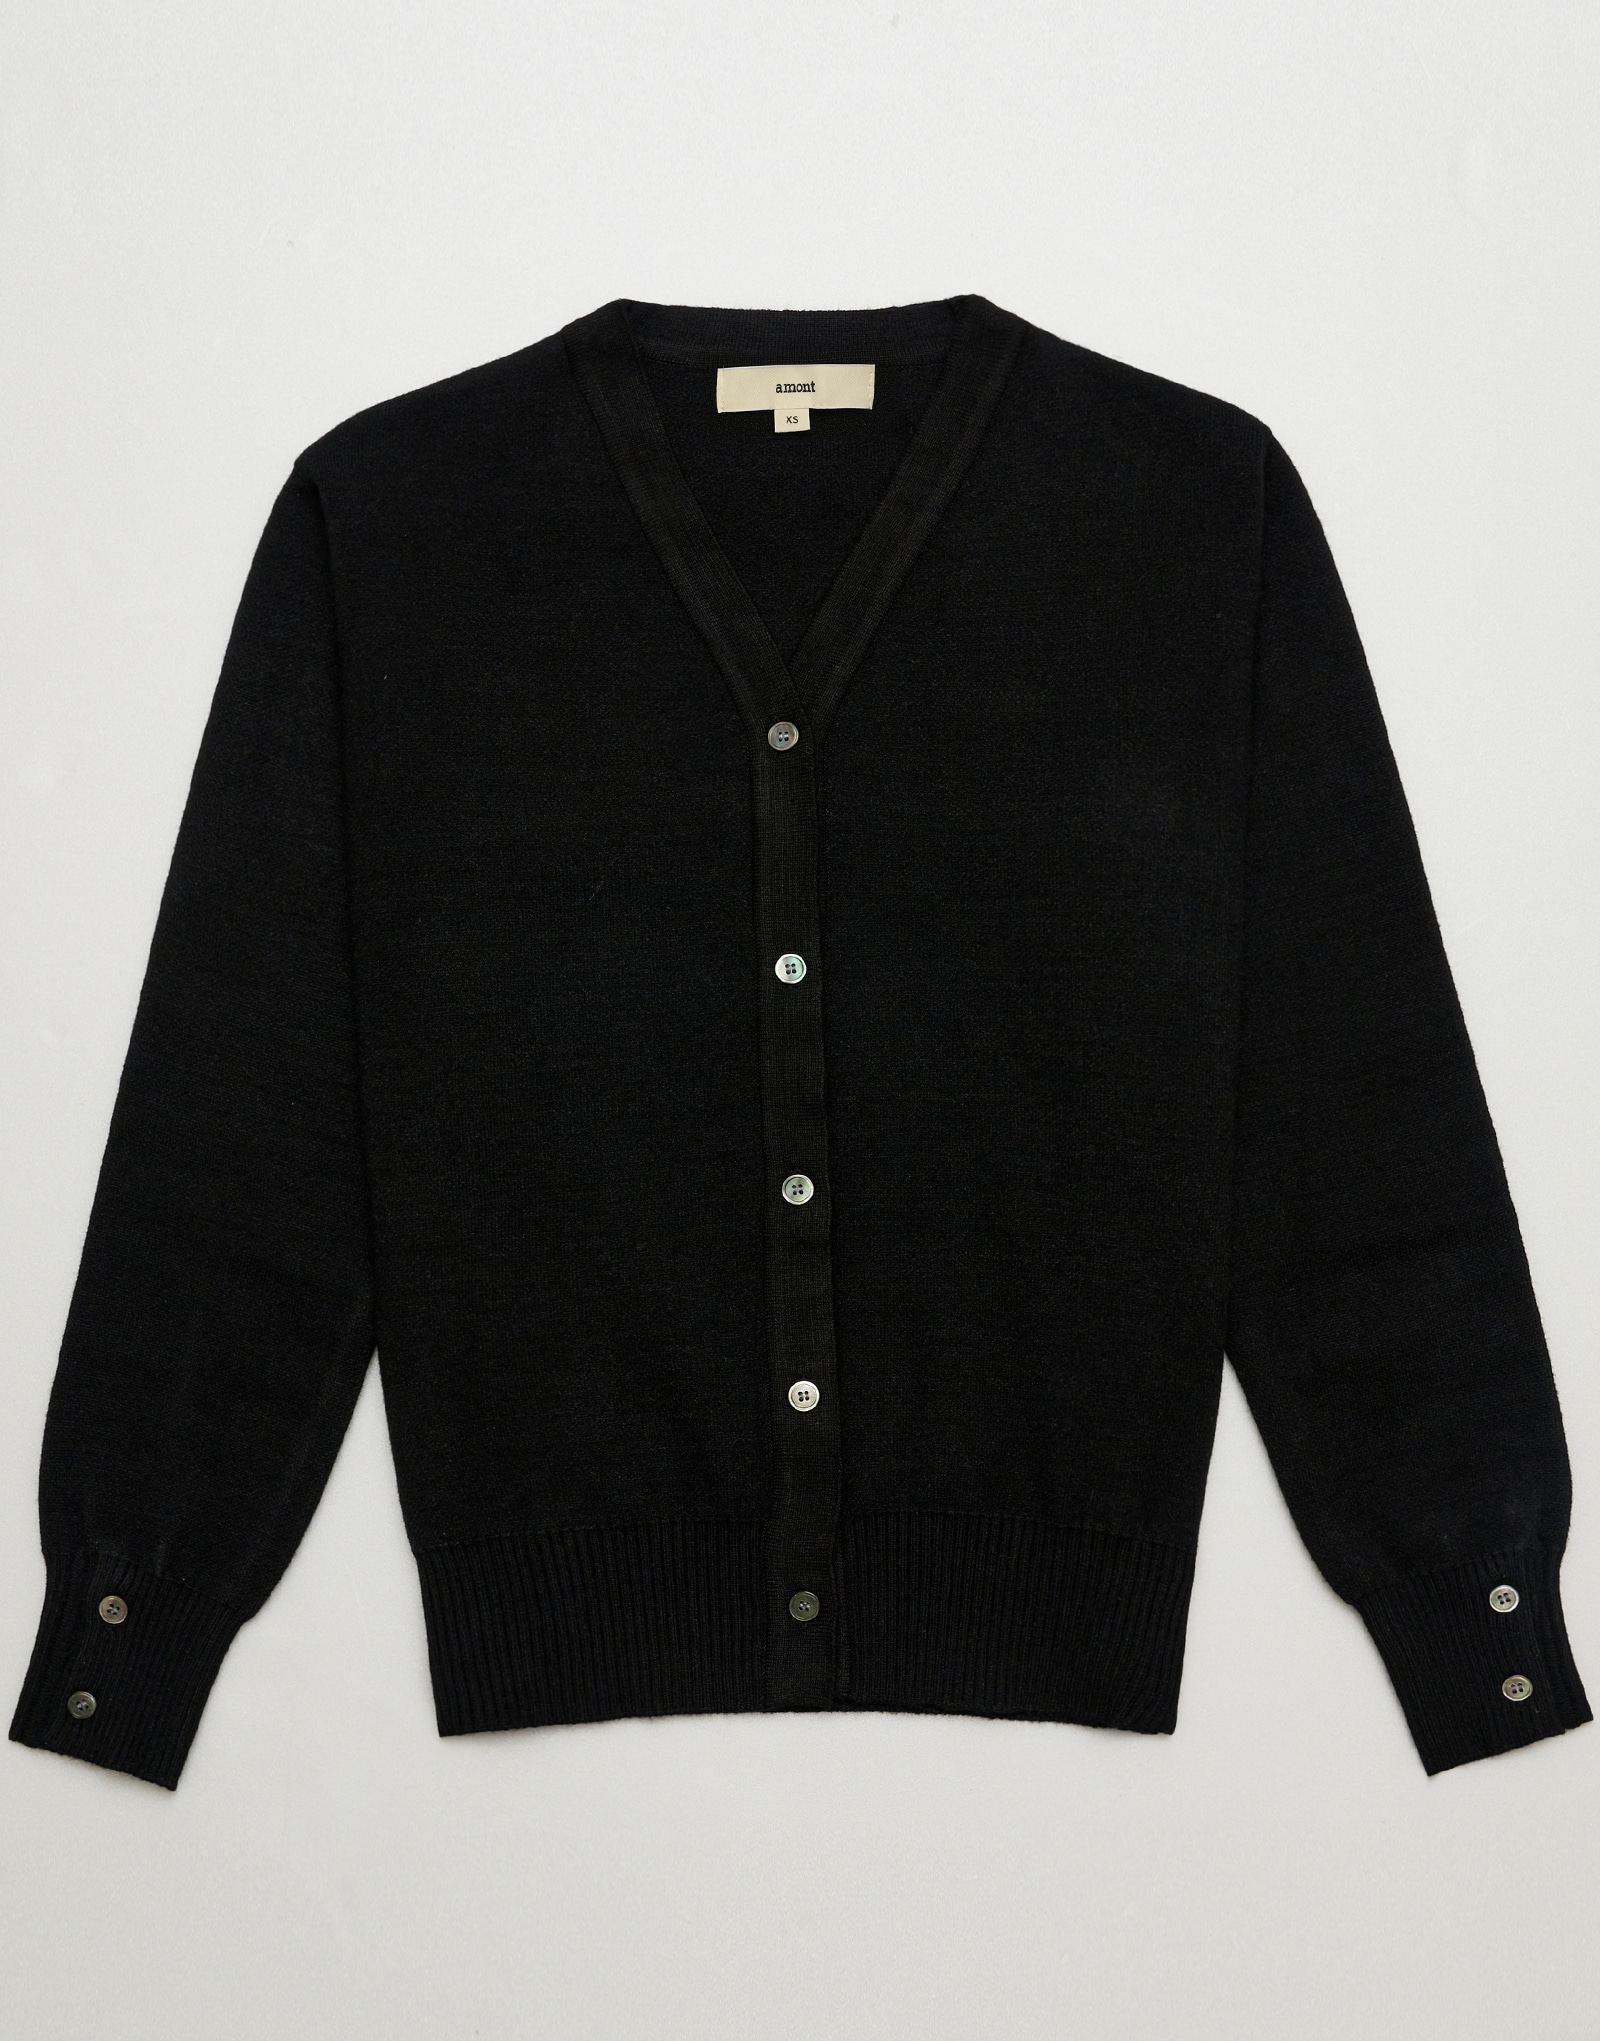 Modern jacquard knit warm cardigan #AC2018 Black